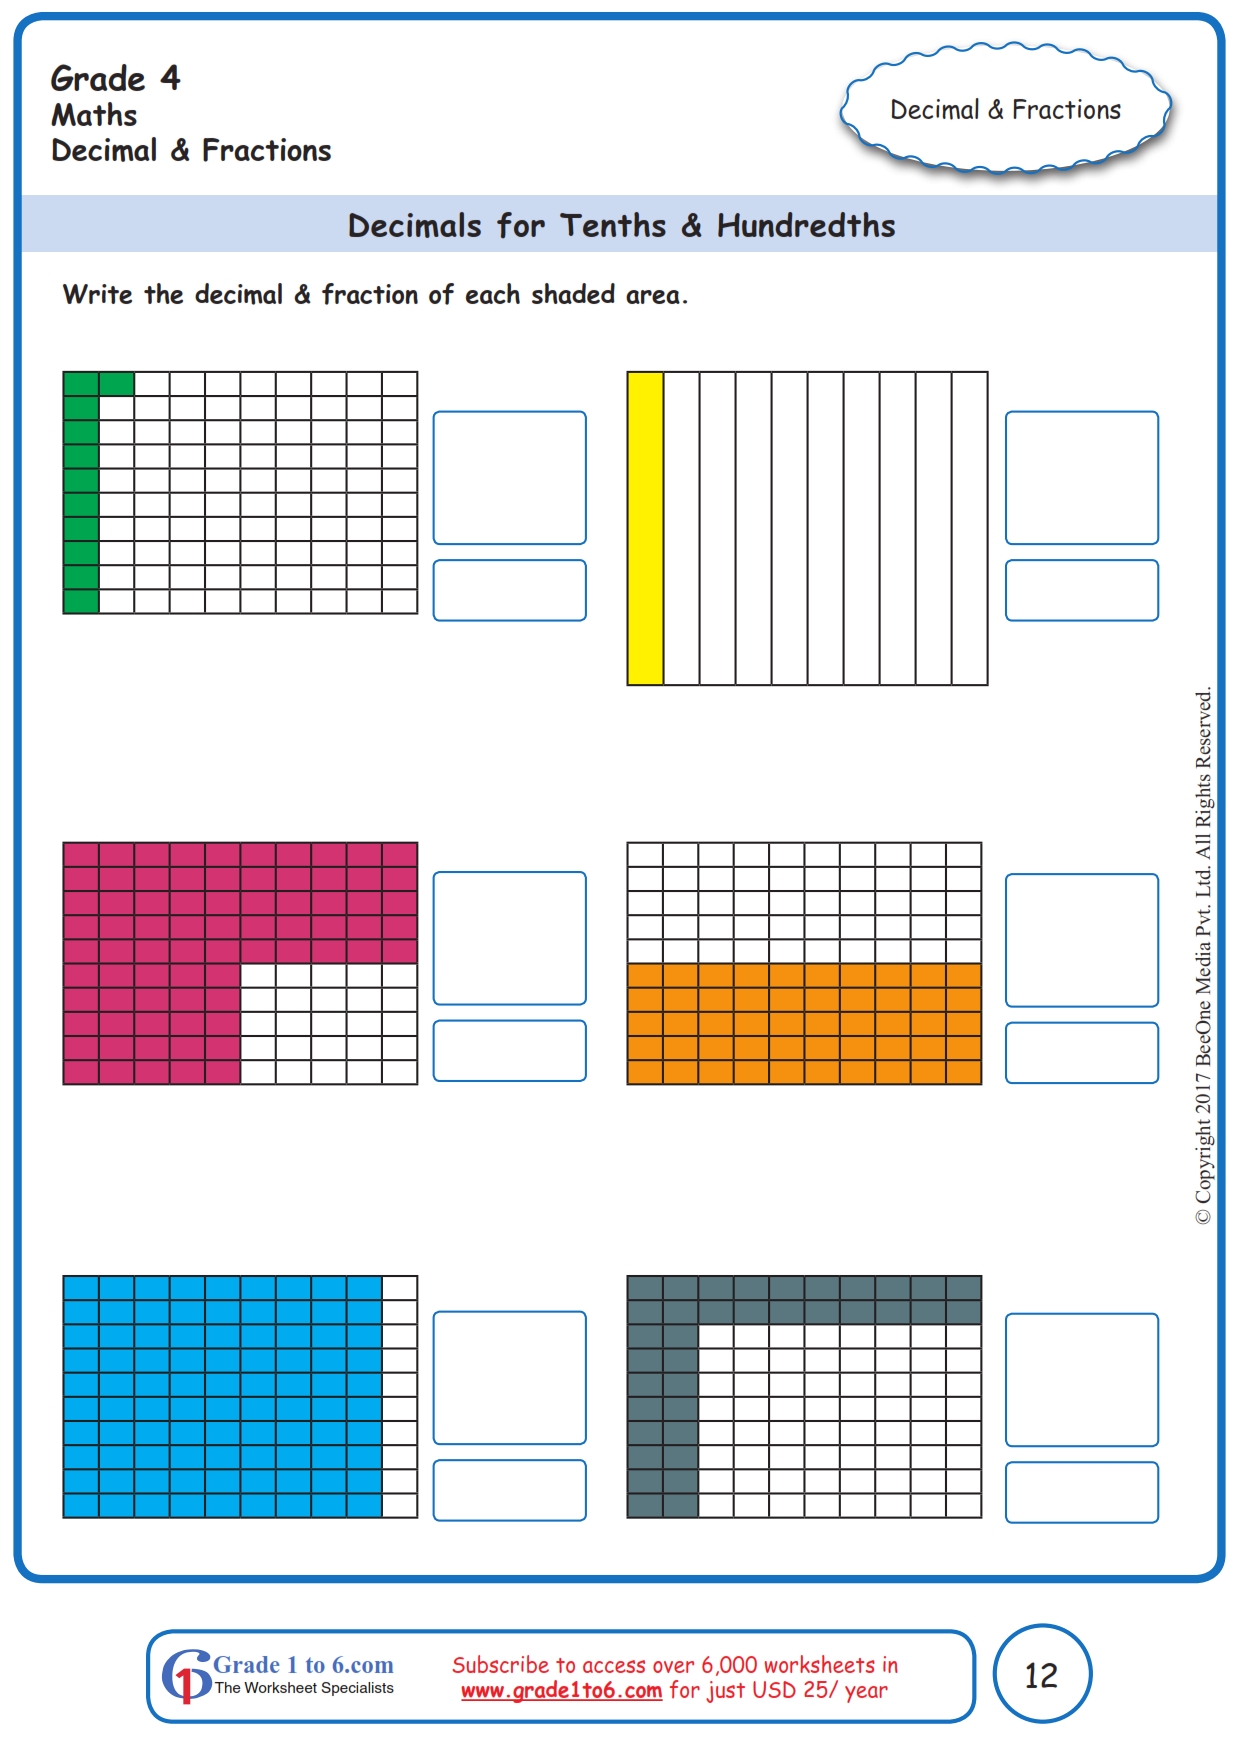 Grade 4 Decimals Tenths Worksheets www grade1to6